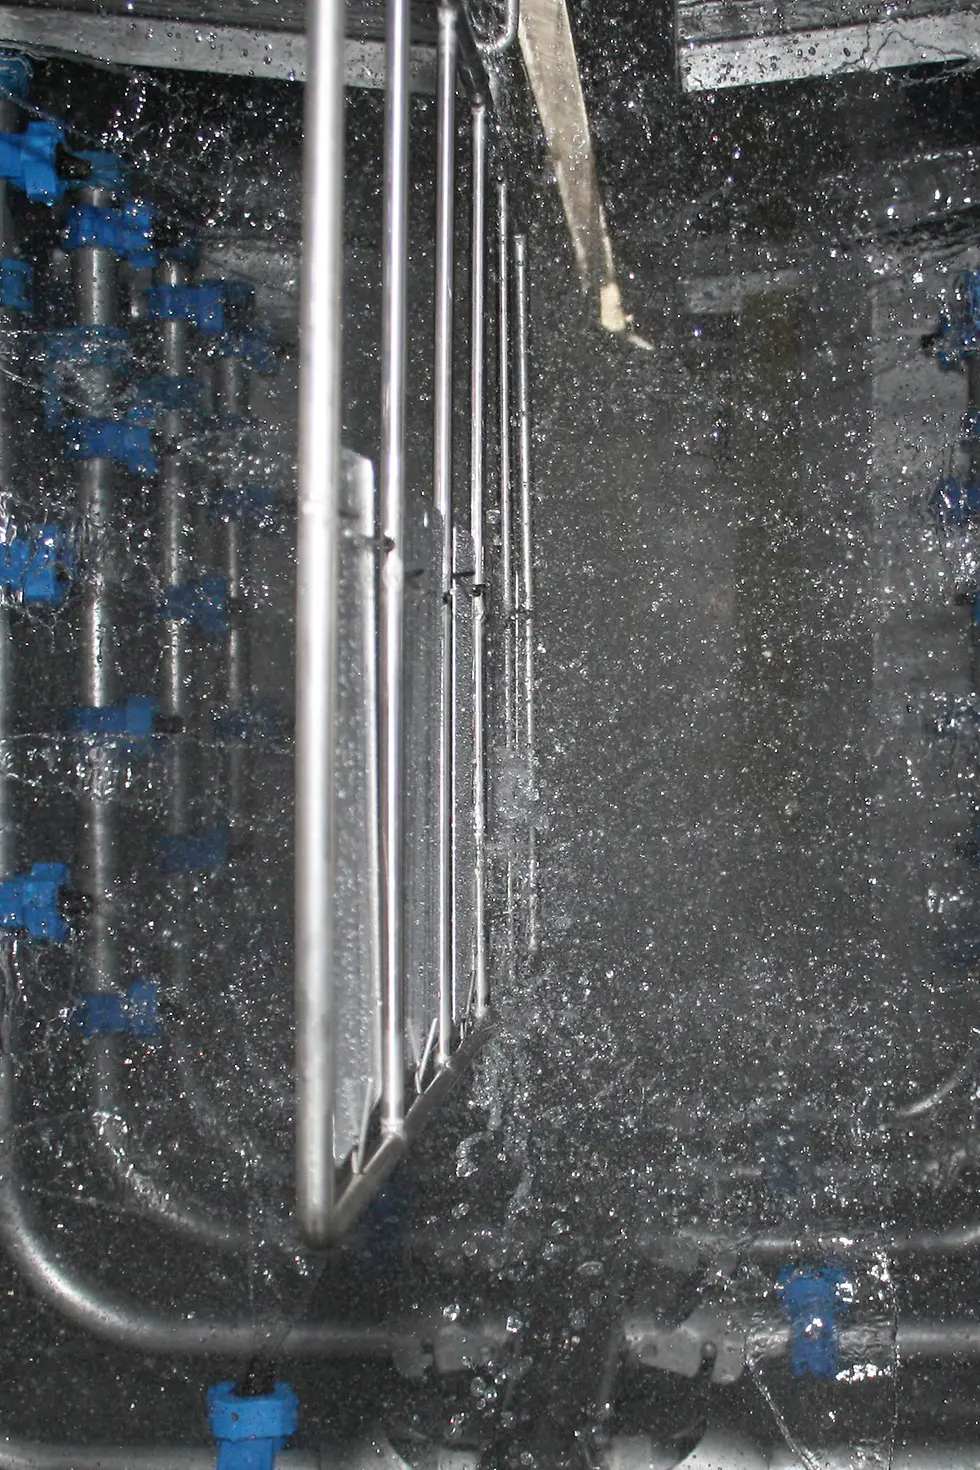 
Funktionsbeschichtung: Beschichtung von Aluminiumoberflächen